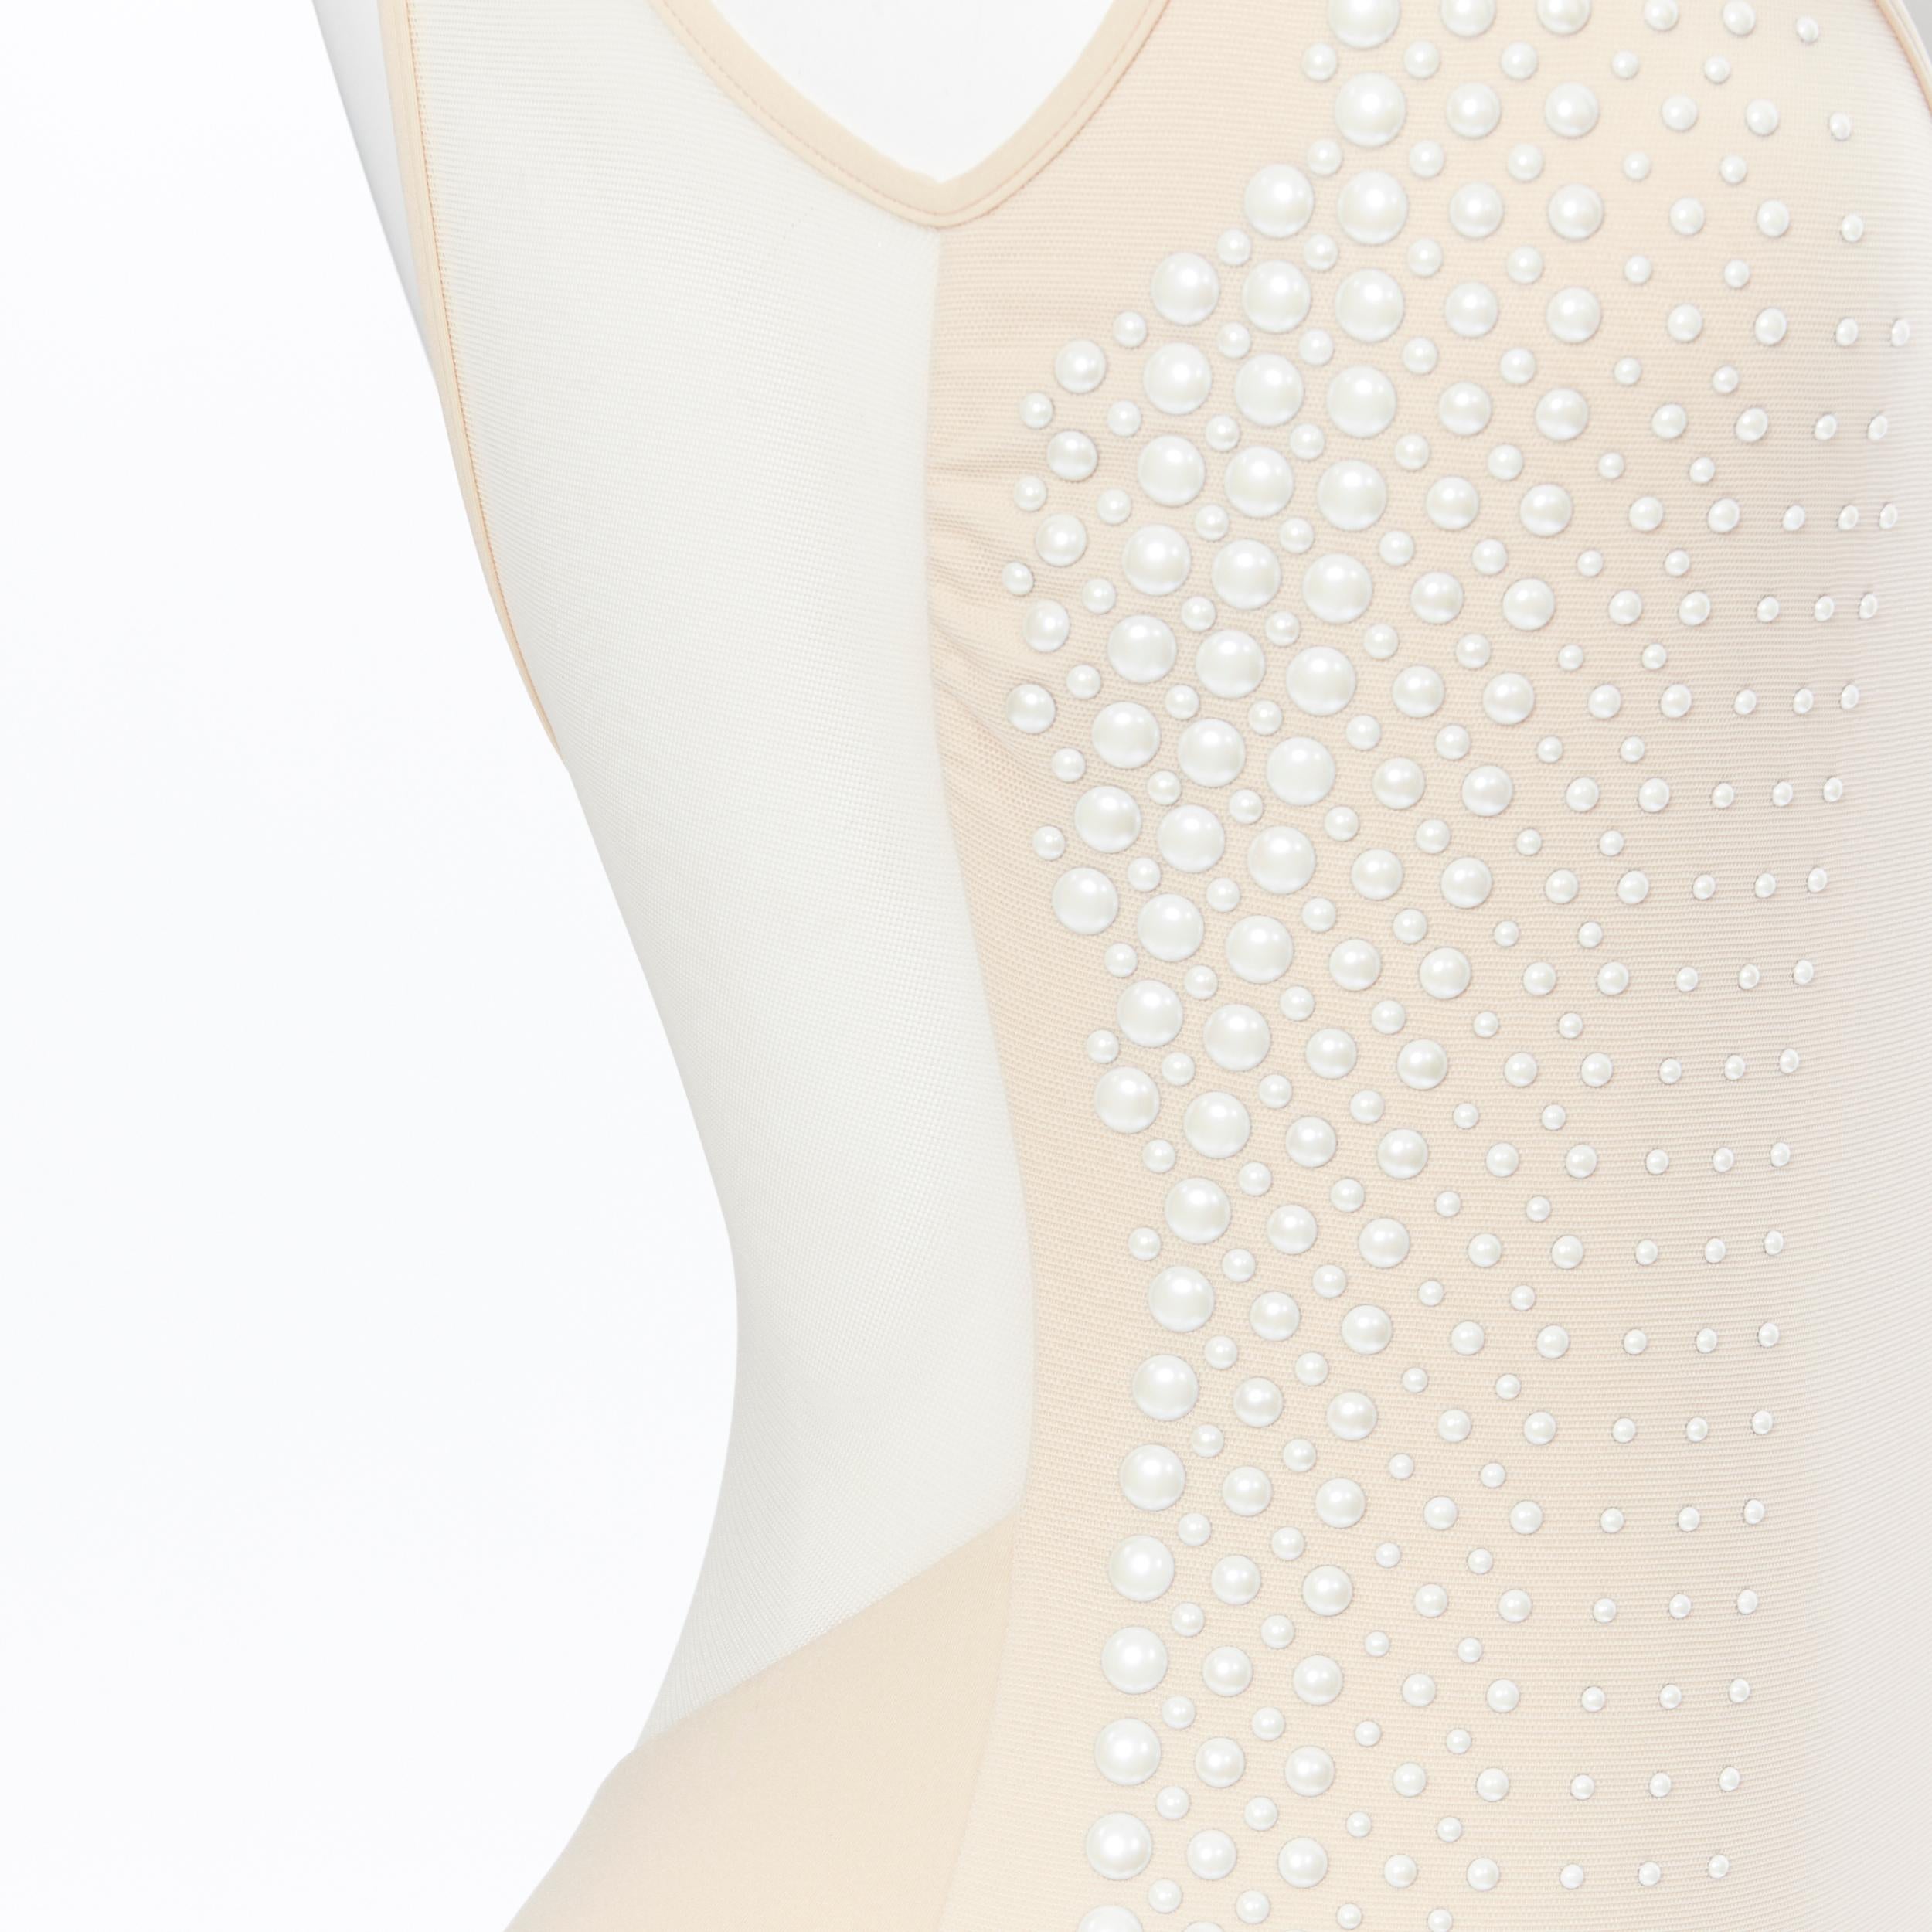 Women's new LA PERLA cream nude white pearl bead embellished mesh monokini IT42B S